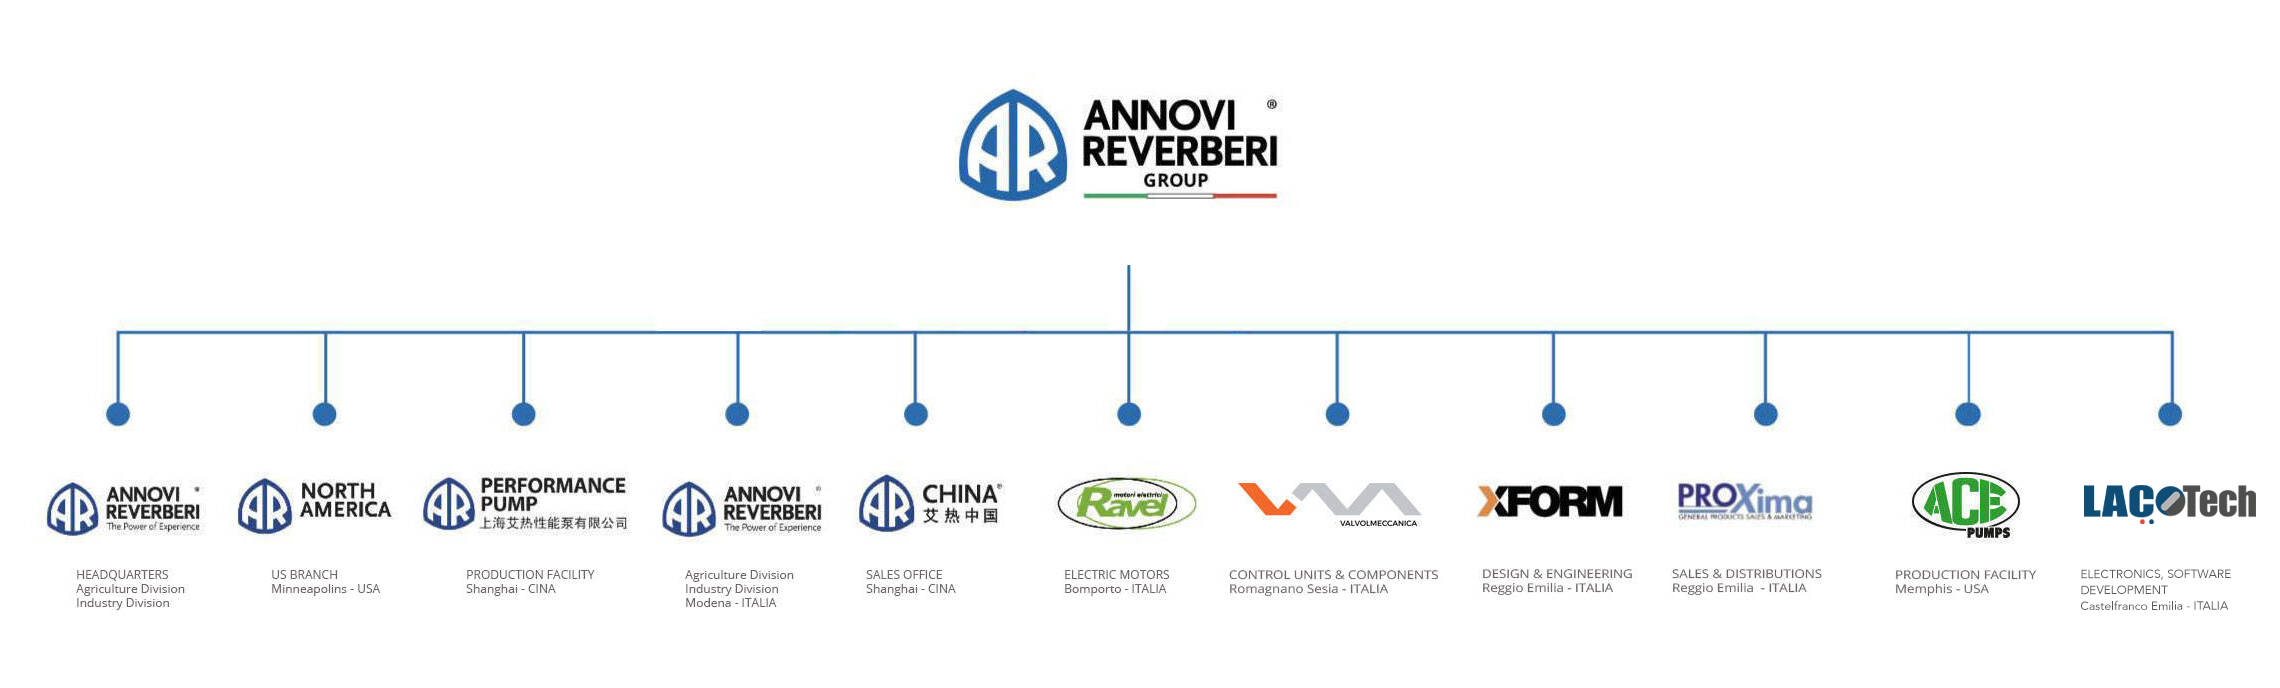 The Annovi Reverberi Group